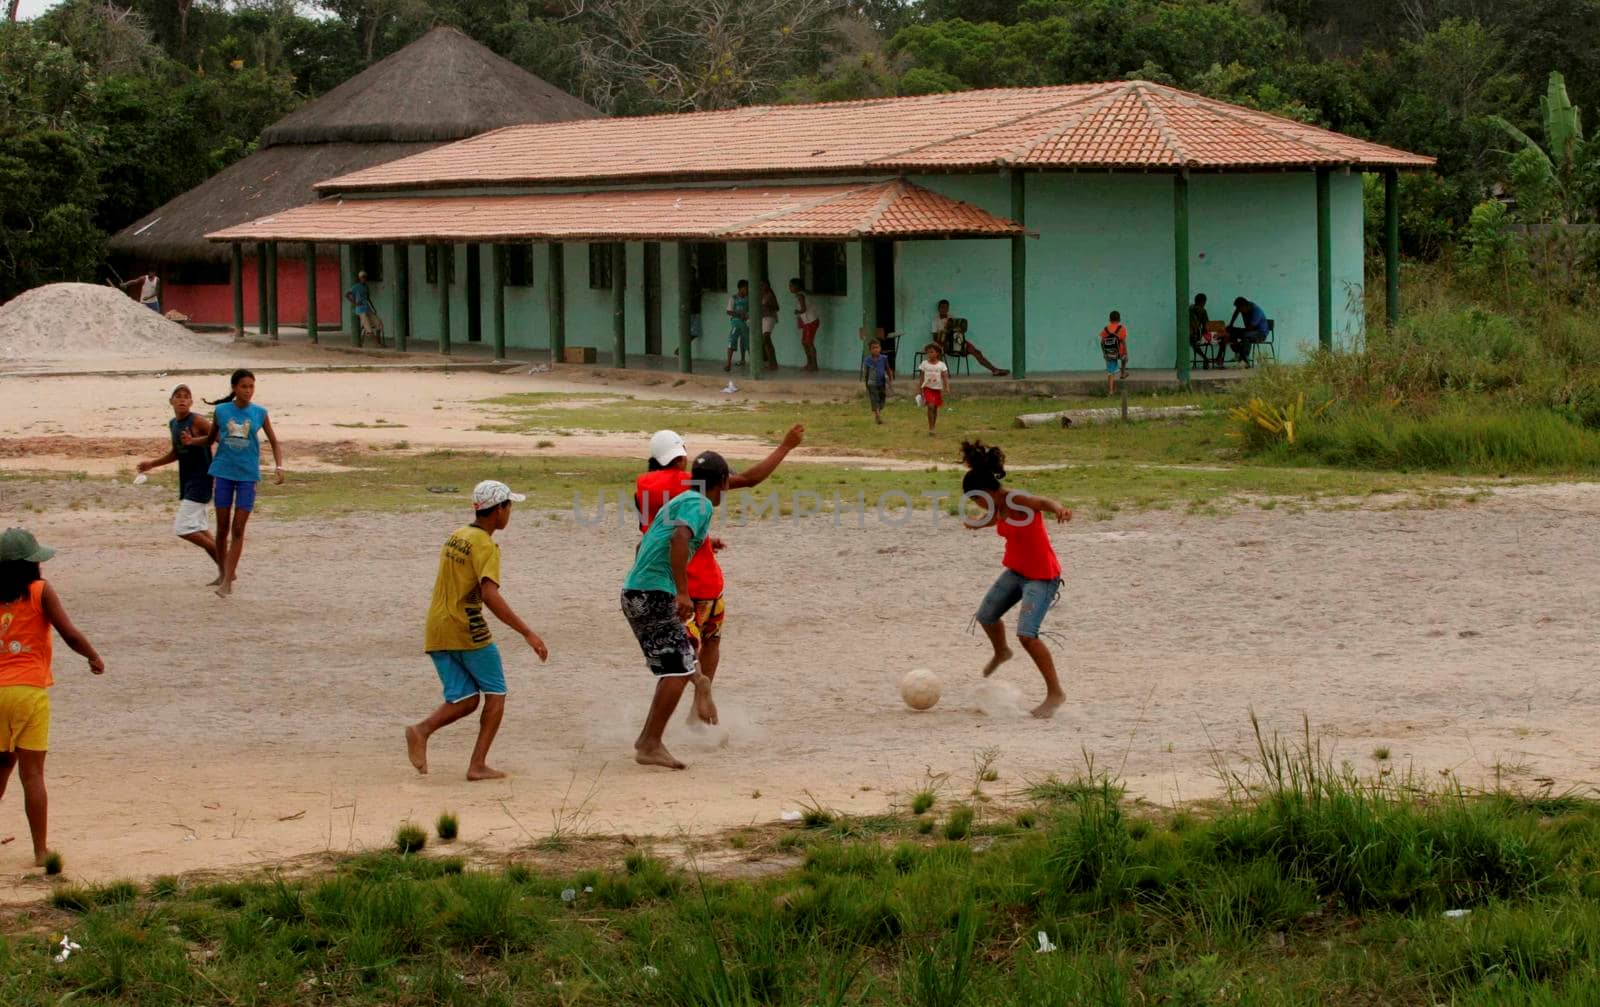 santa cruz cabralia, bahia / brazil - September 30, 2009: Indigenous children of the Pataxo ethnic group are seen playing soccer on land field area in Indian school in Coroa Vermelha village in Santa Cruz Cabralia city.

